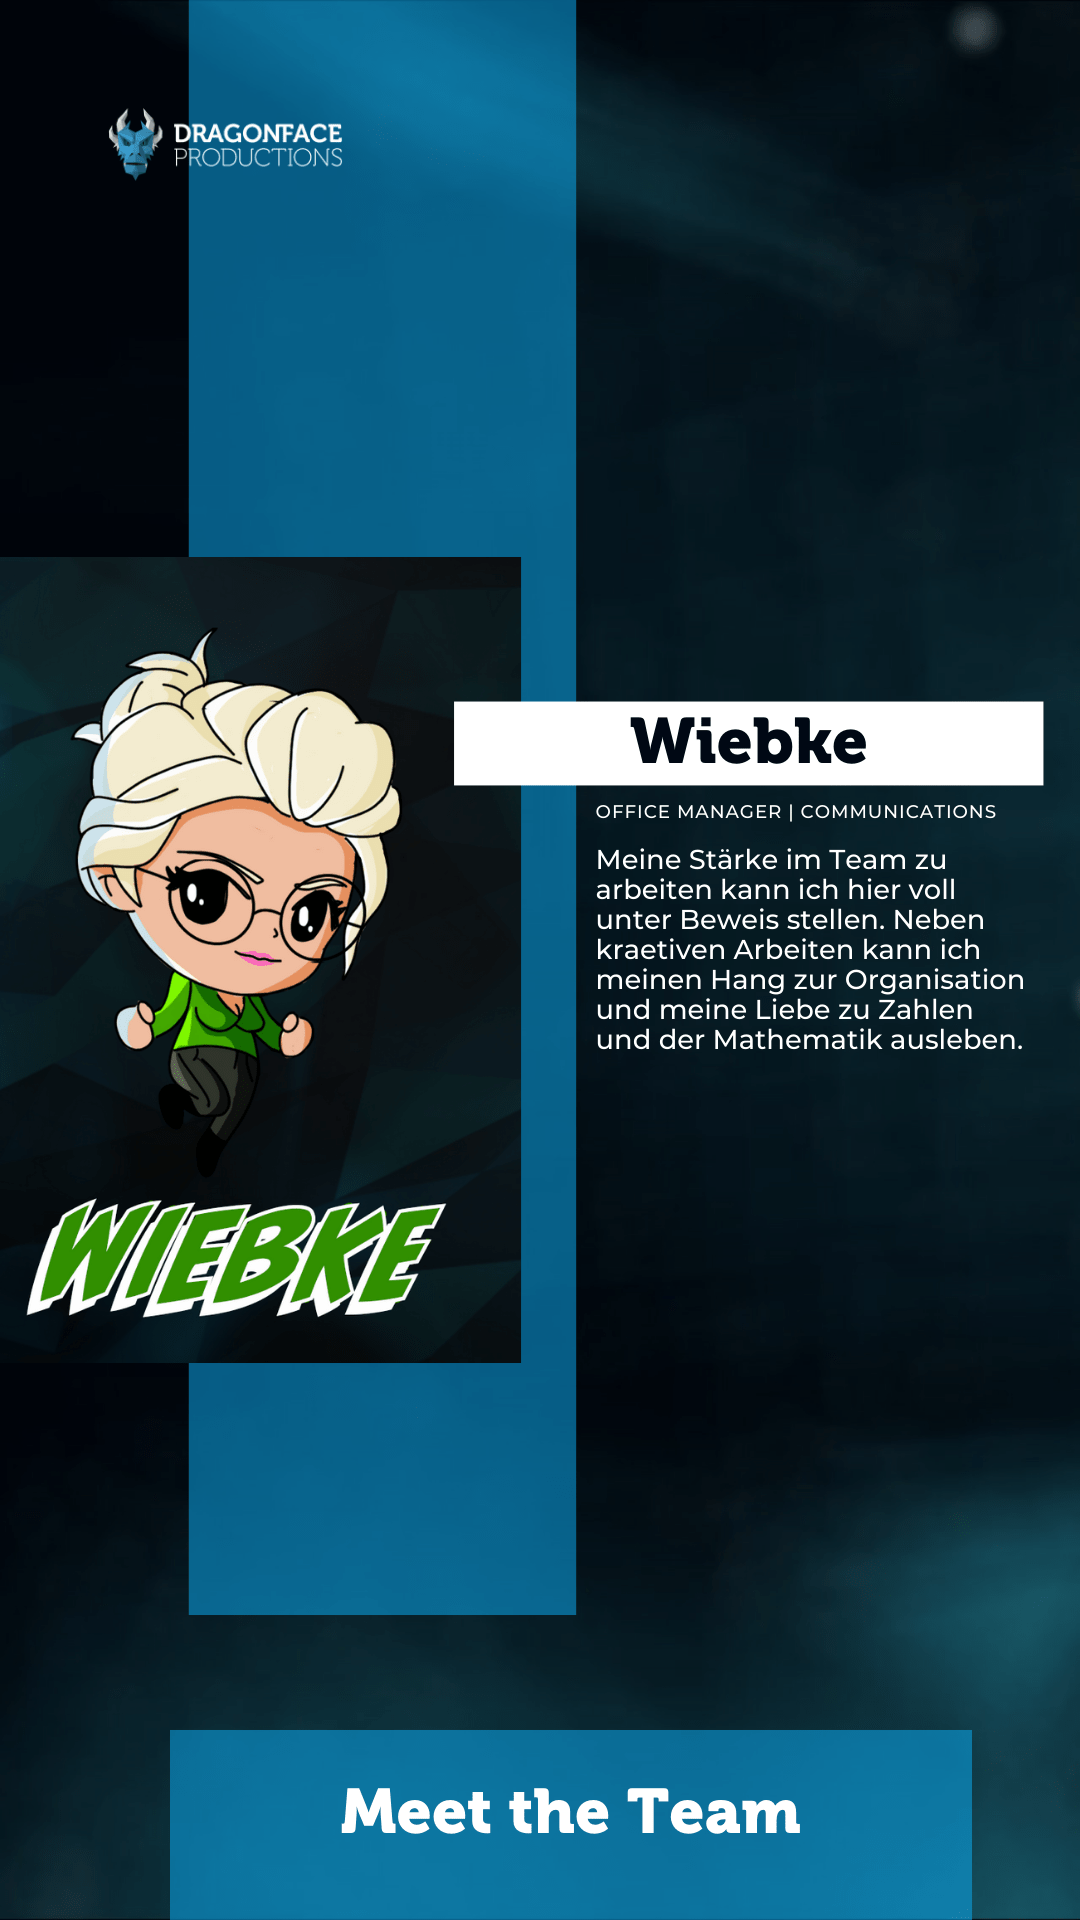 Team Wiebke